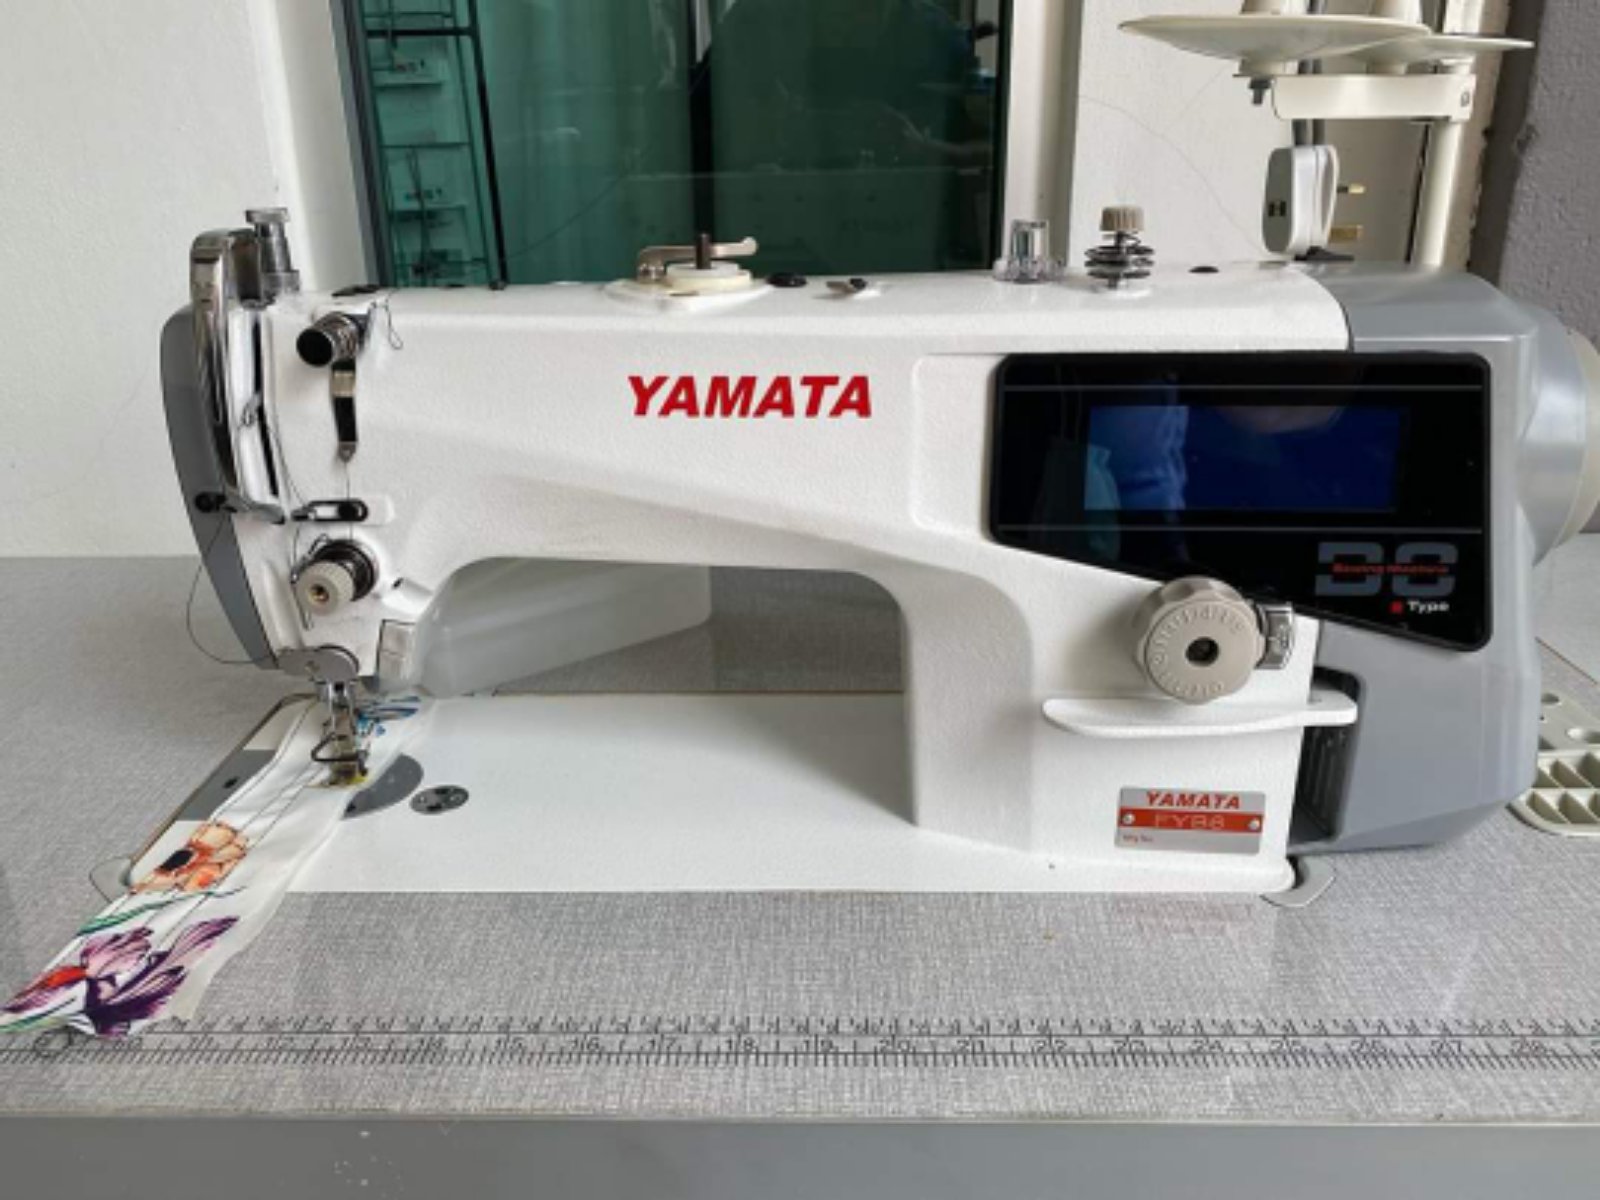 Yamata Industrial Hi Speed Sewing Automatik Direct Drive Motor Sewing Machine 